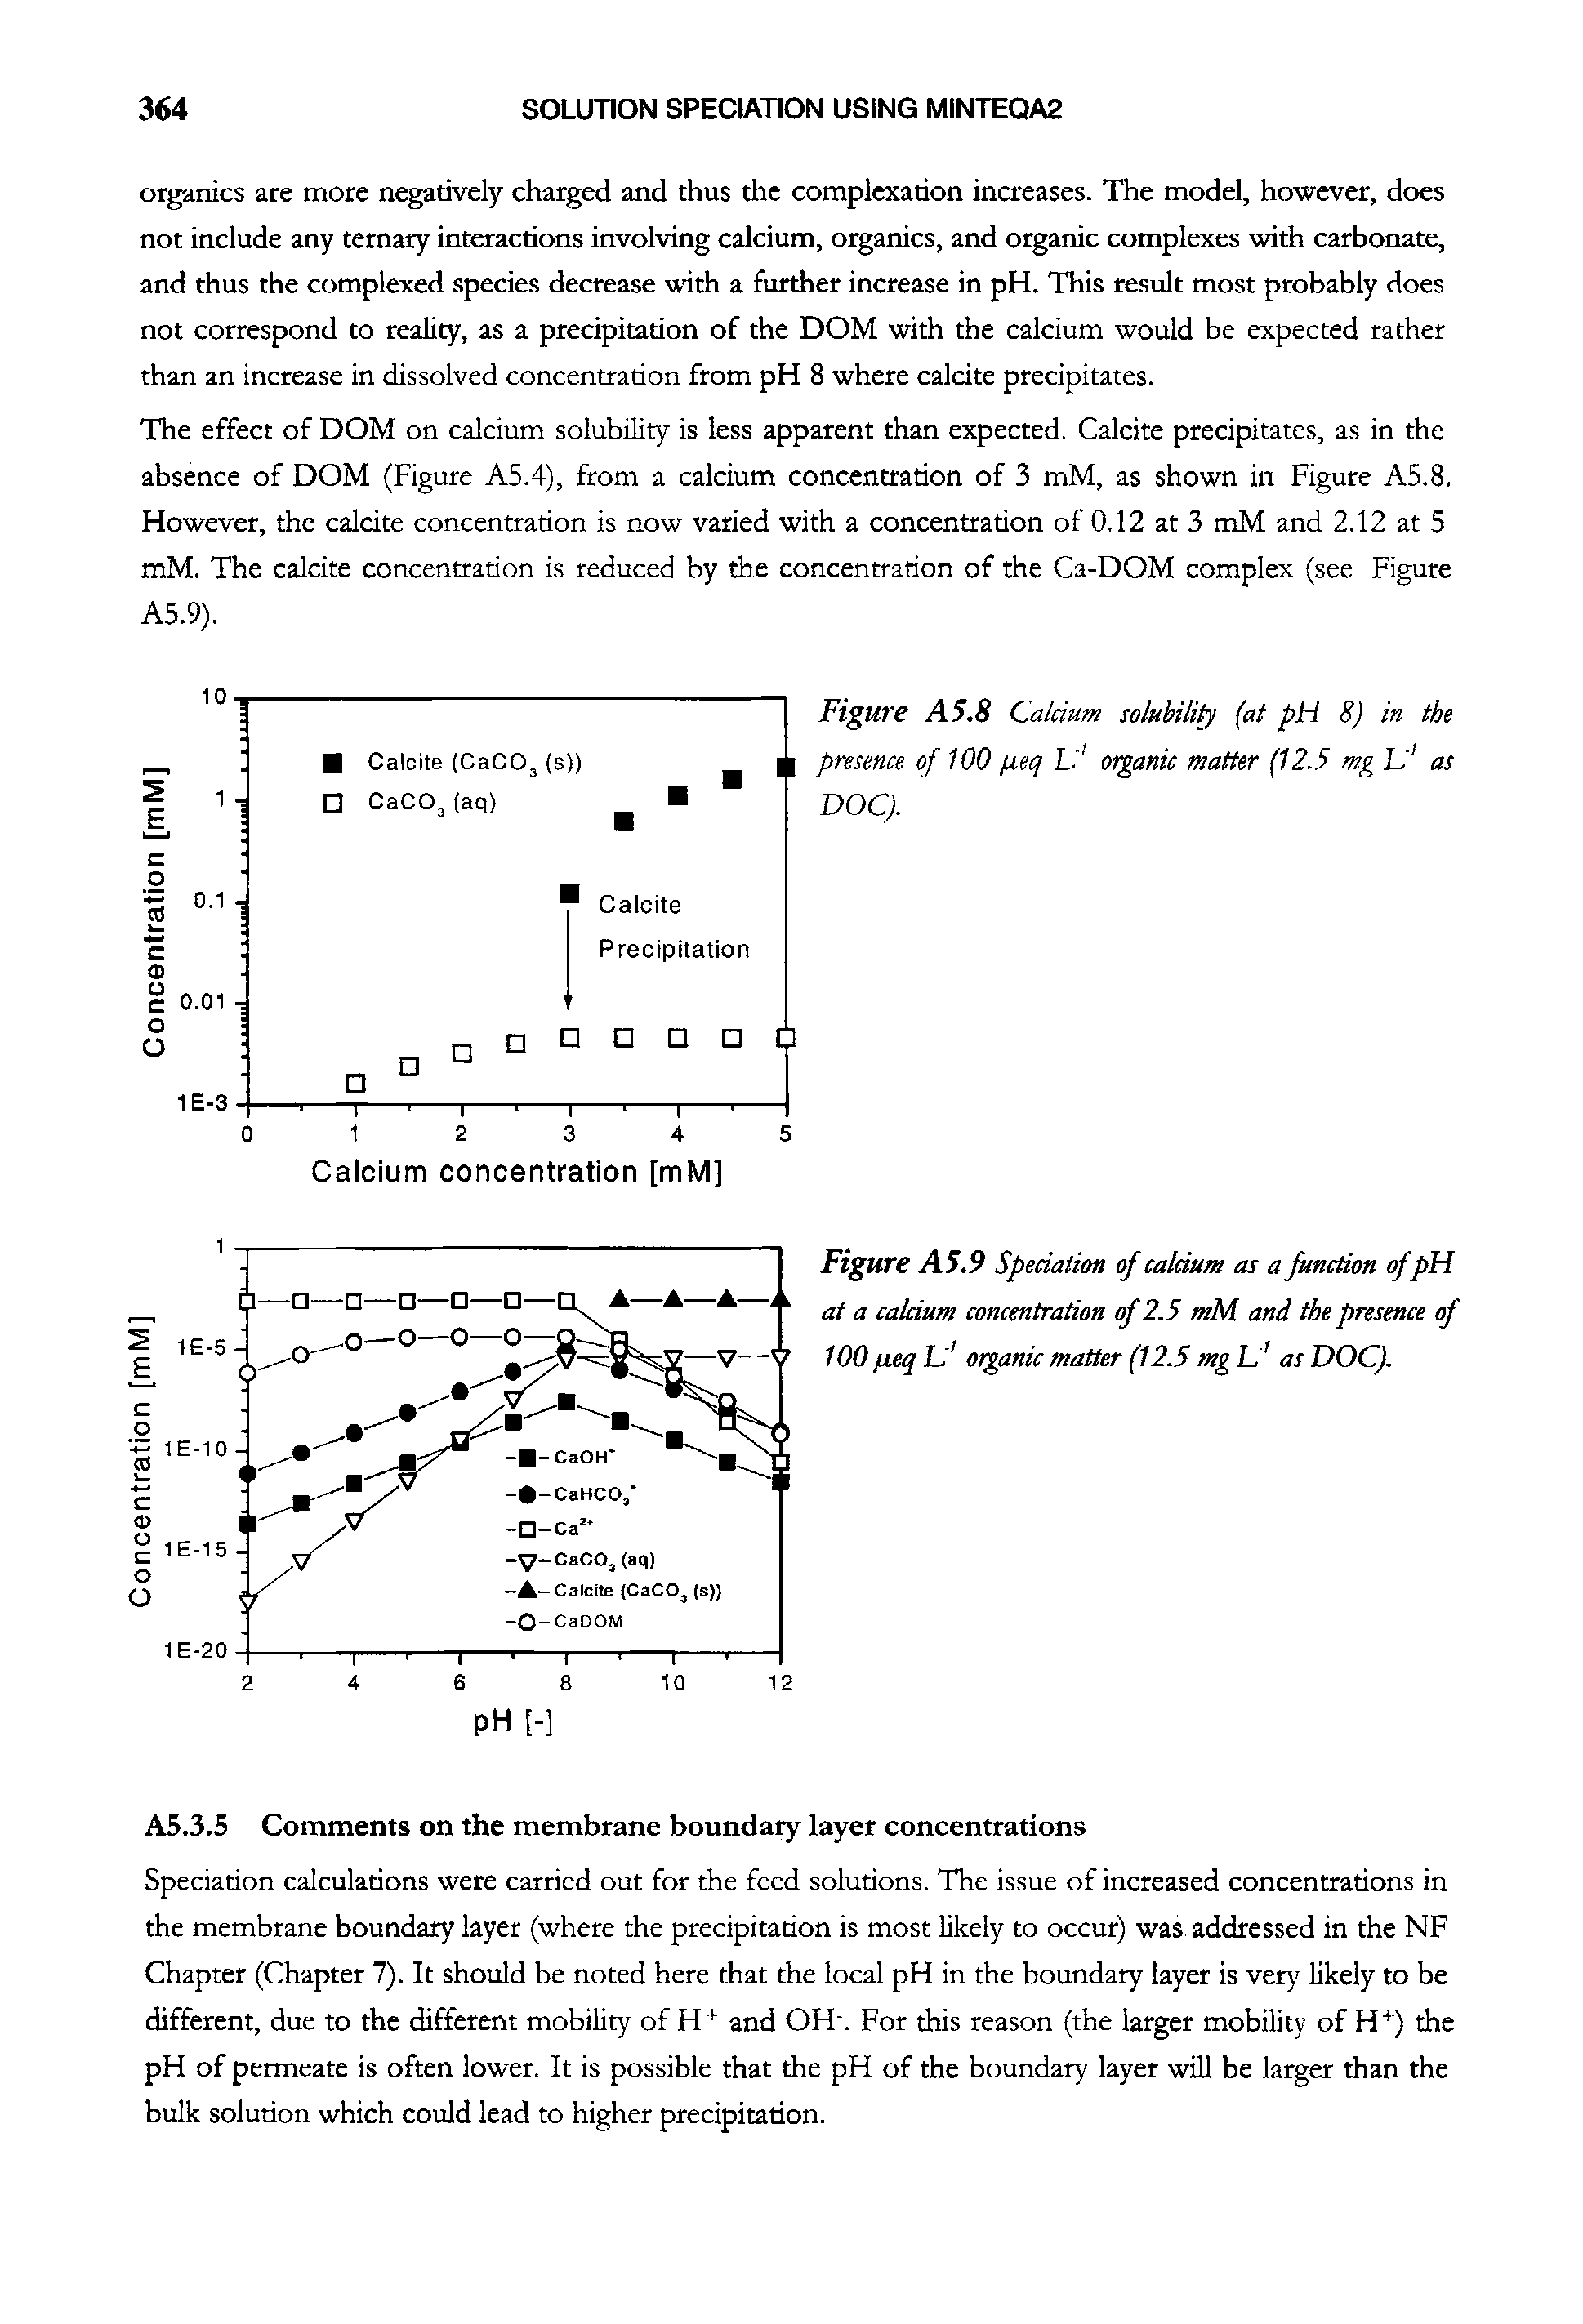 Figure A5.8 Calcium solubility (at pH 8) in the presence of 100 jaeq Li organic matter (12.5 mg Li as DOC).